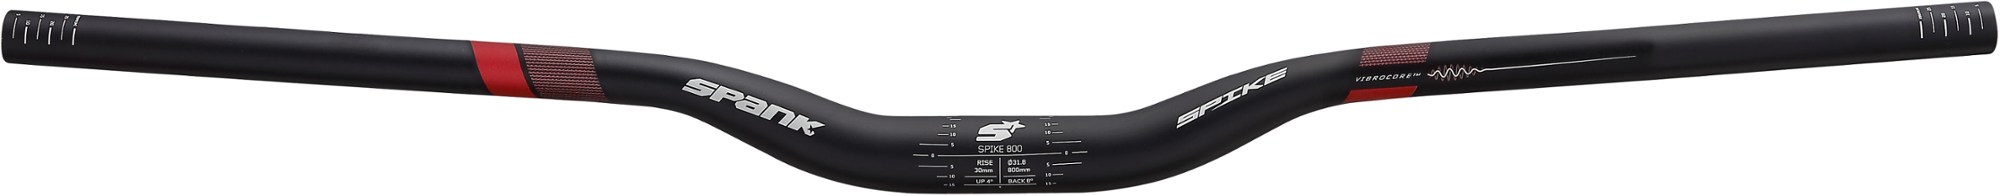 Руль Spike 800 Vibrocore Spank, черный